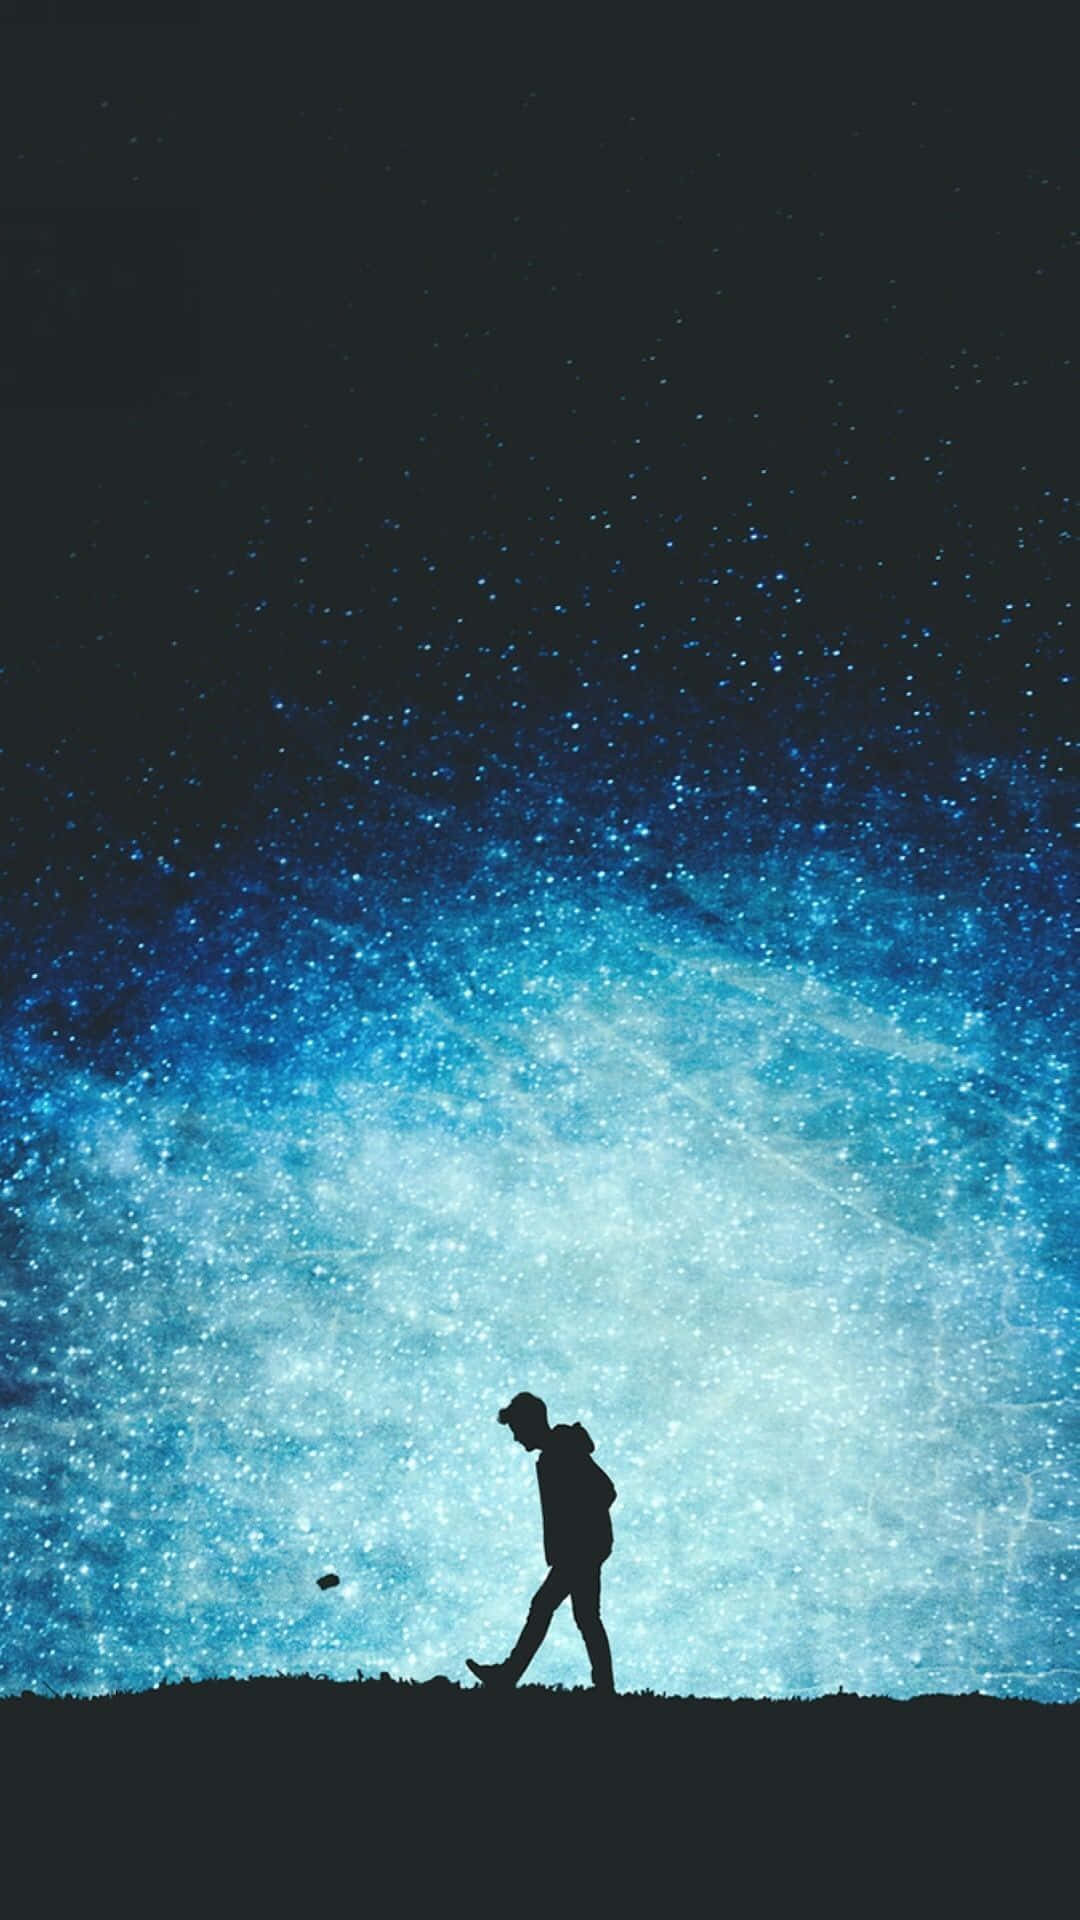 Alone Boy Bright Starry Night Sky Picture